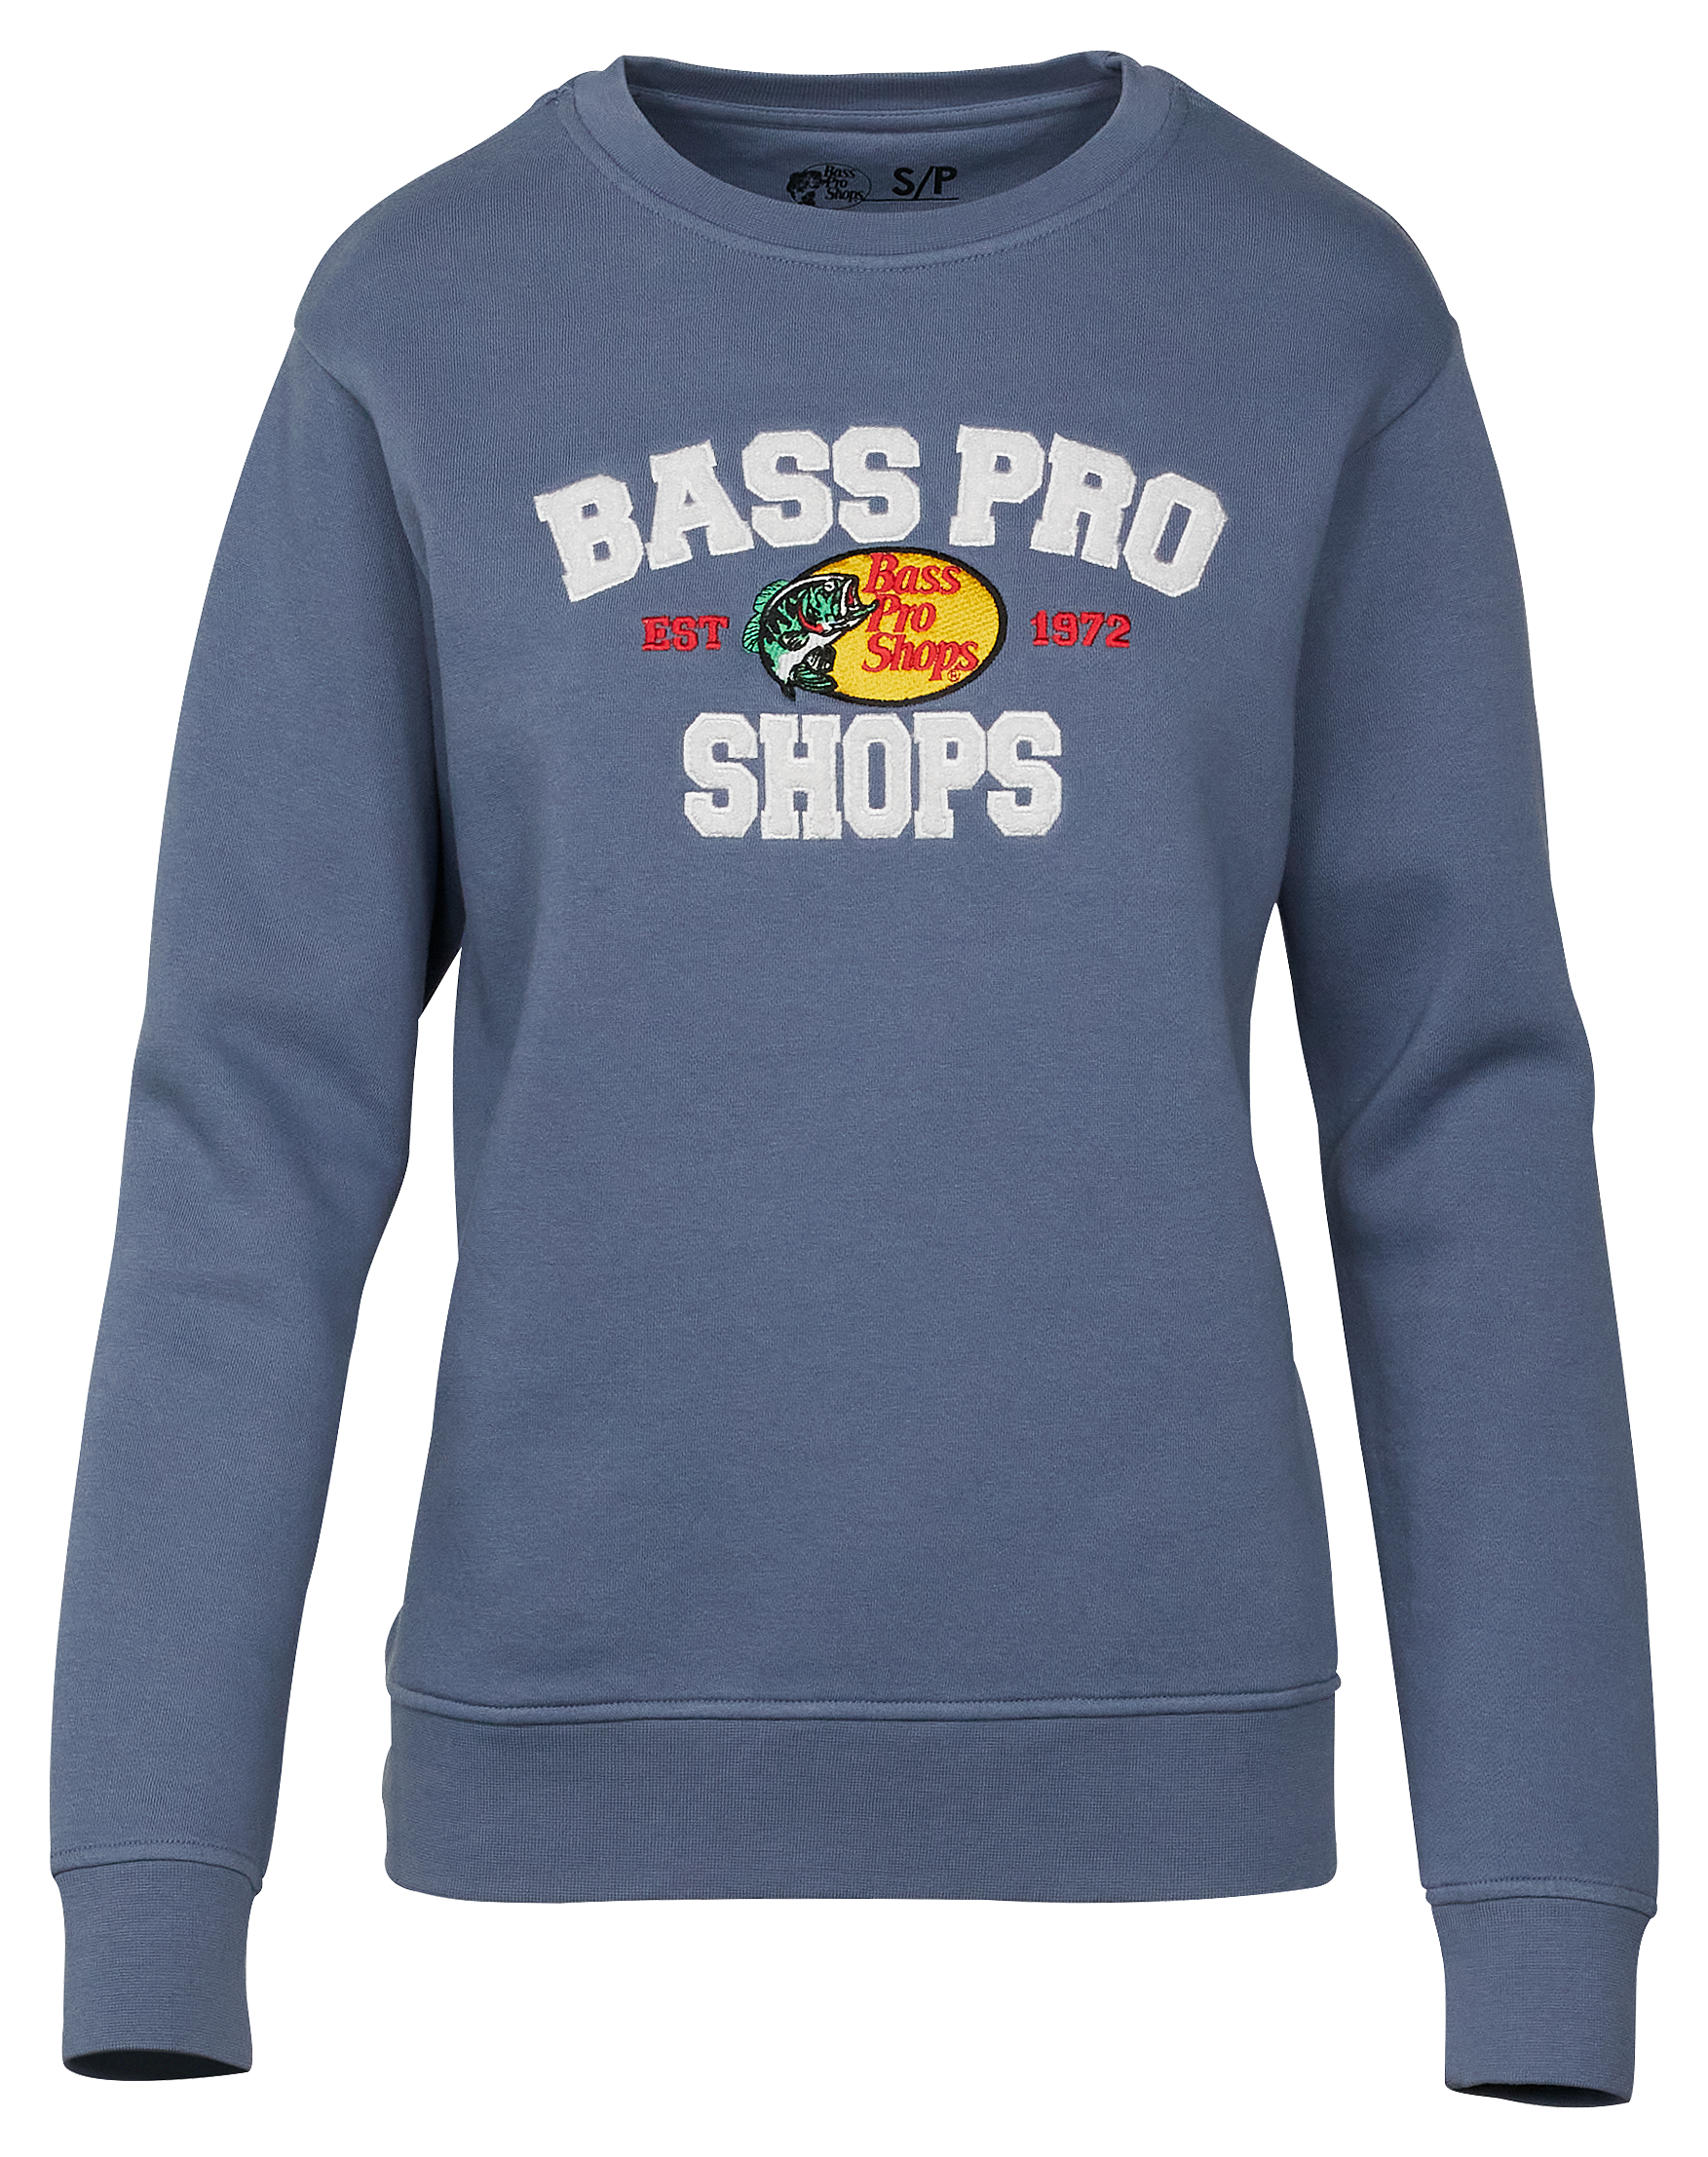 Bass Pro Shops Logo Crew-Neck Long-Sleeve Sweatshirt for Ladies - Flint Stone - S